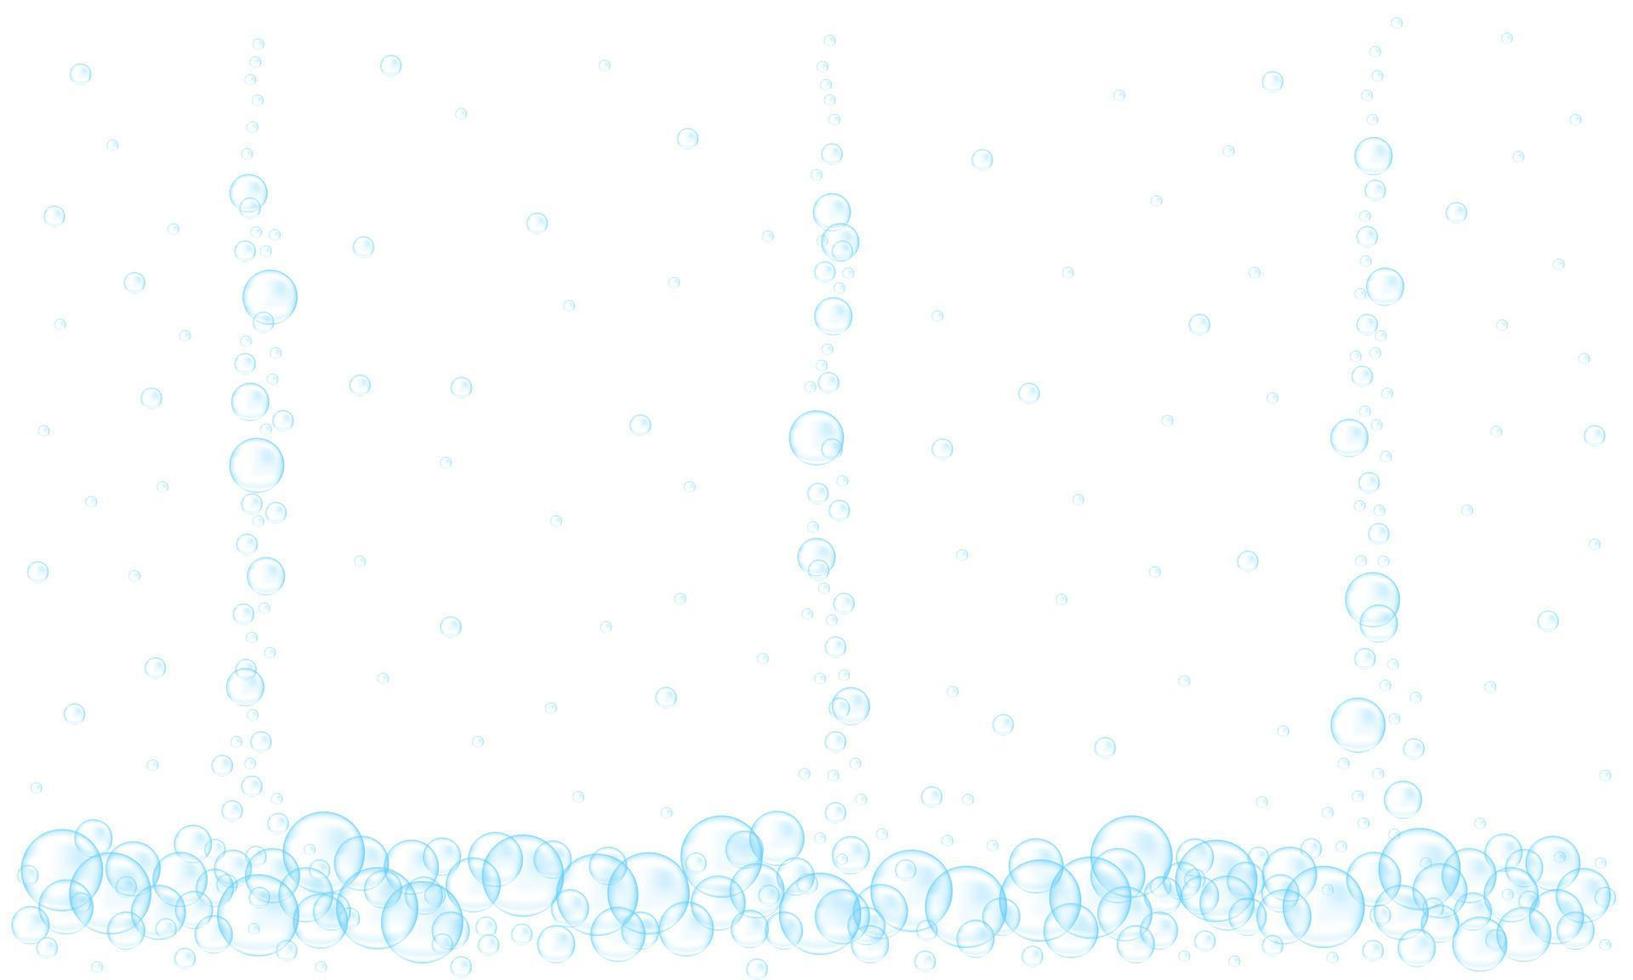 burbujas submarinas azules aisladas sobre fondo blanco. bebida gaseosa carbonatada, espuma de jabón, espuma de mar, textura de corriente de agua de acuario vector